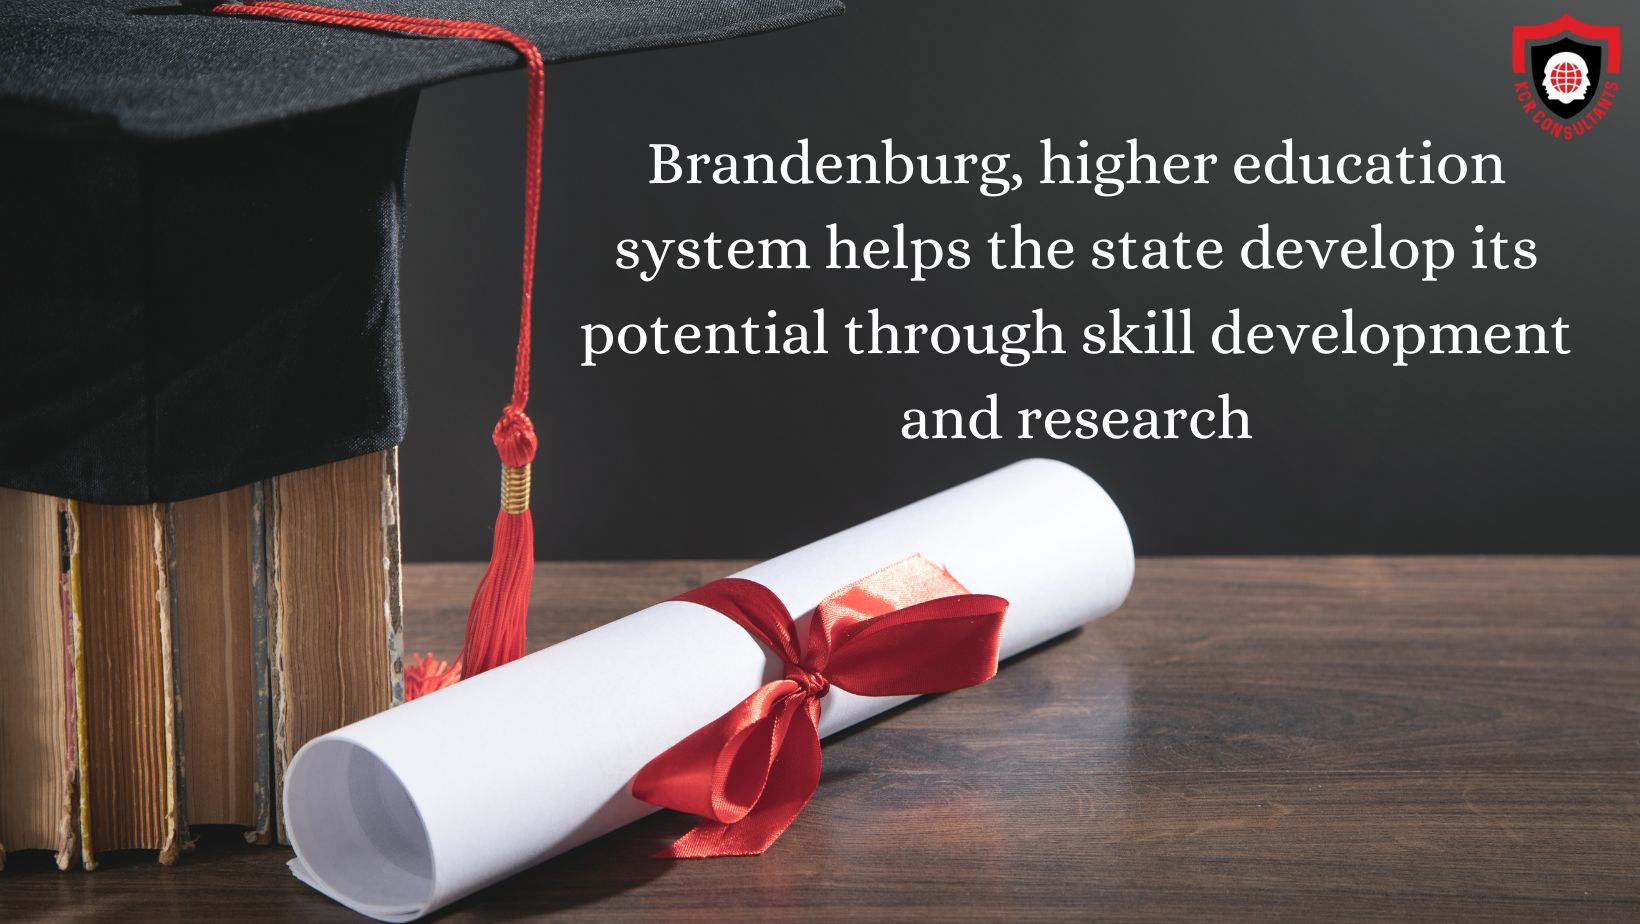 BRANDENBURG - KCR CONSULTANTS - higher education